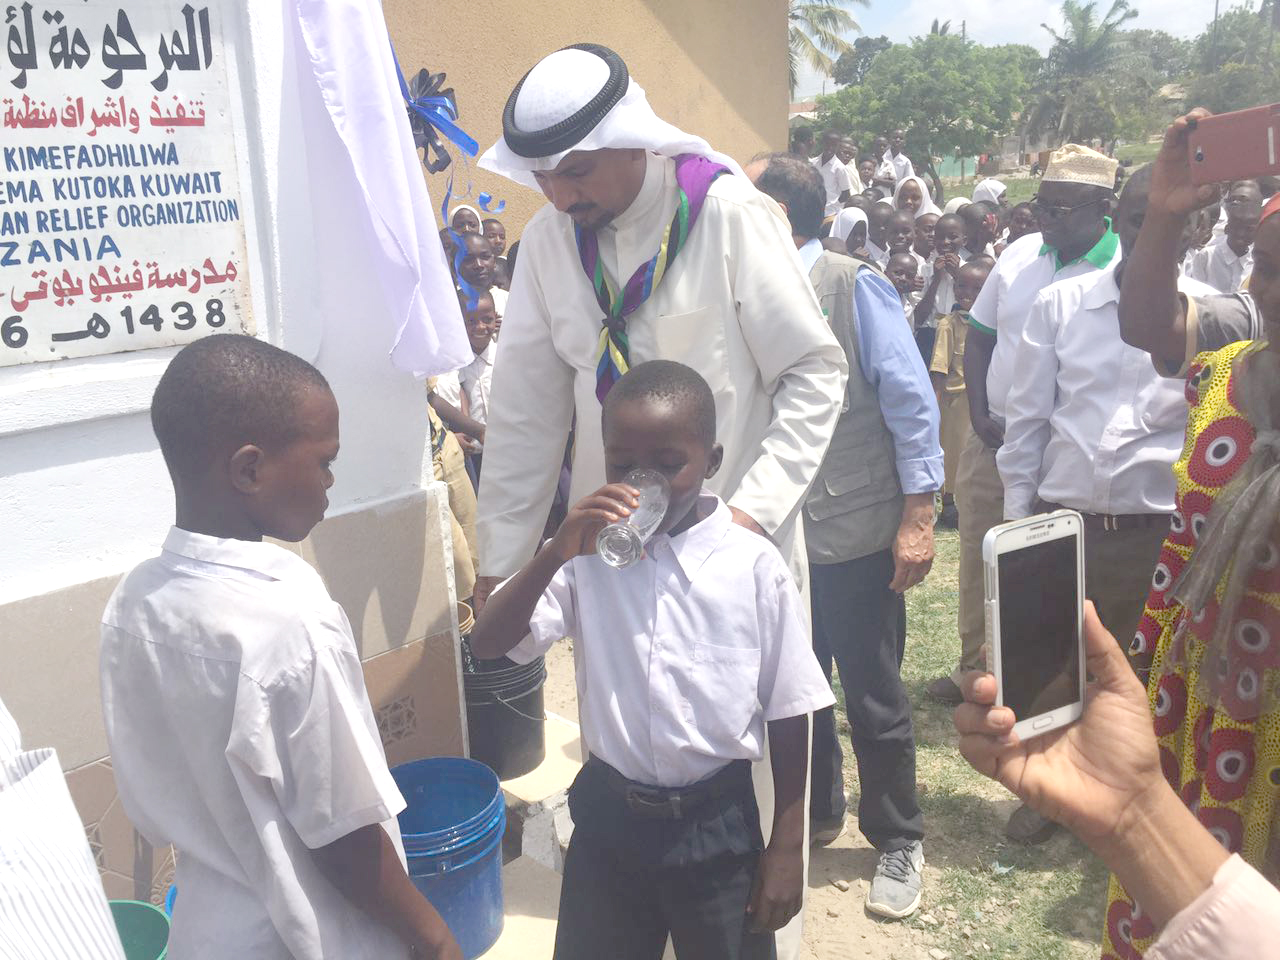 Ambassador of Kuwait to Tanzania Jassem Al-Najem inaugurates five water wells simultaneously at five schools in Dar es Salaam